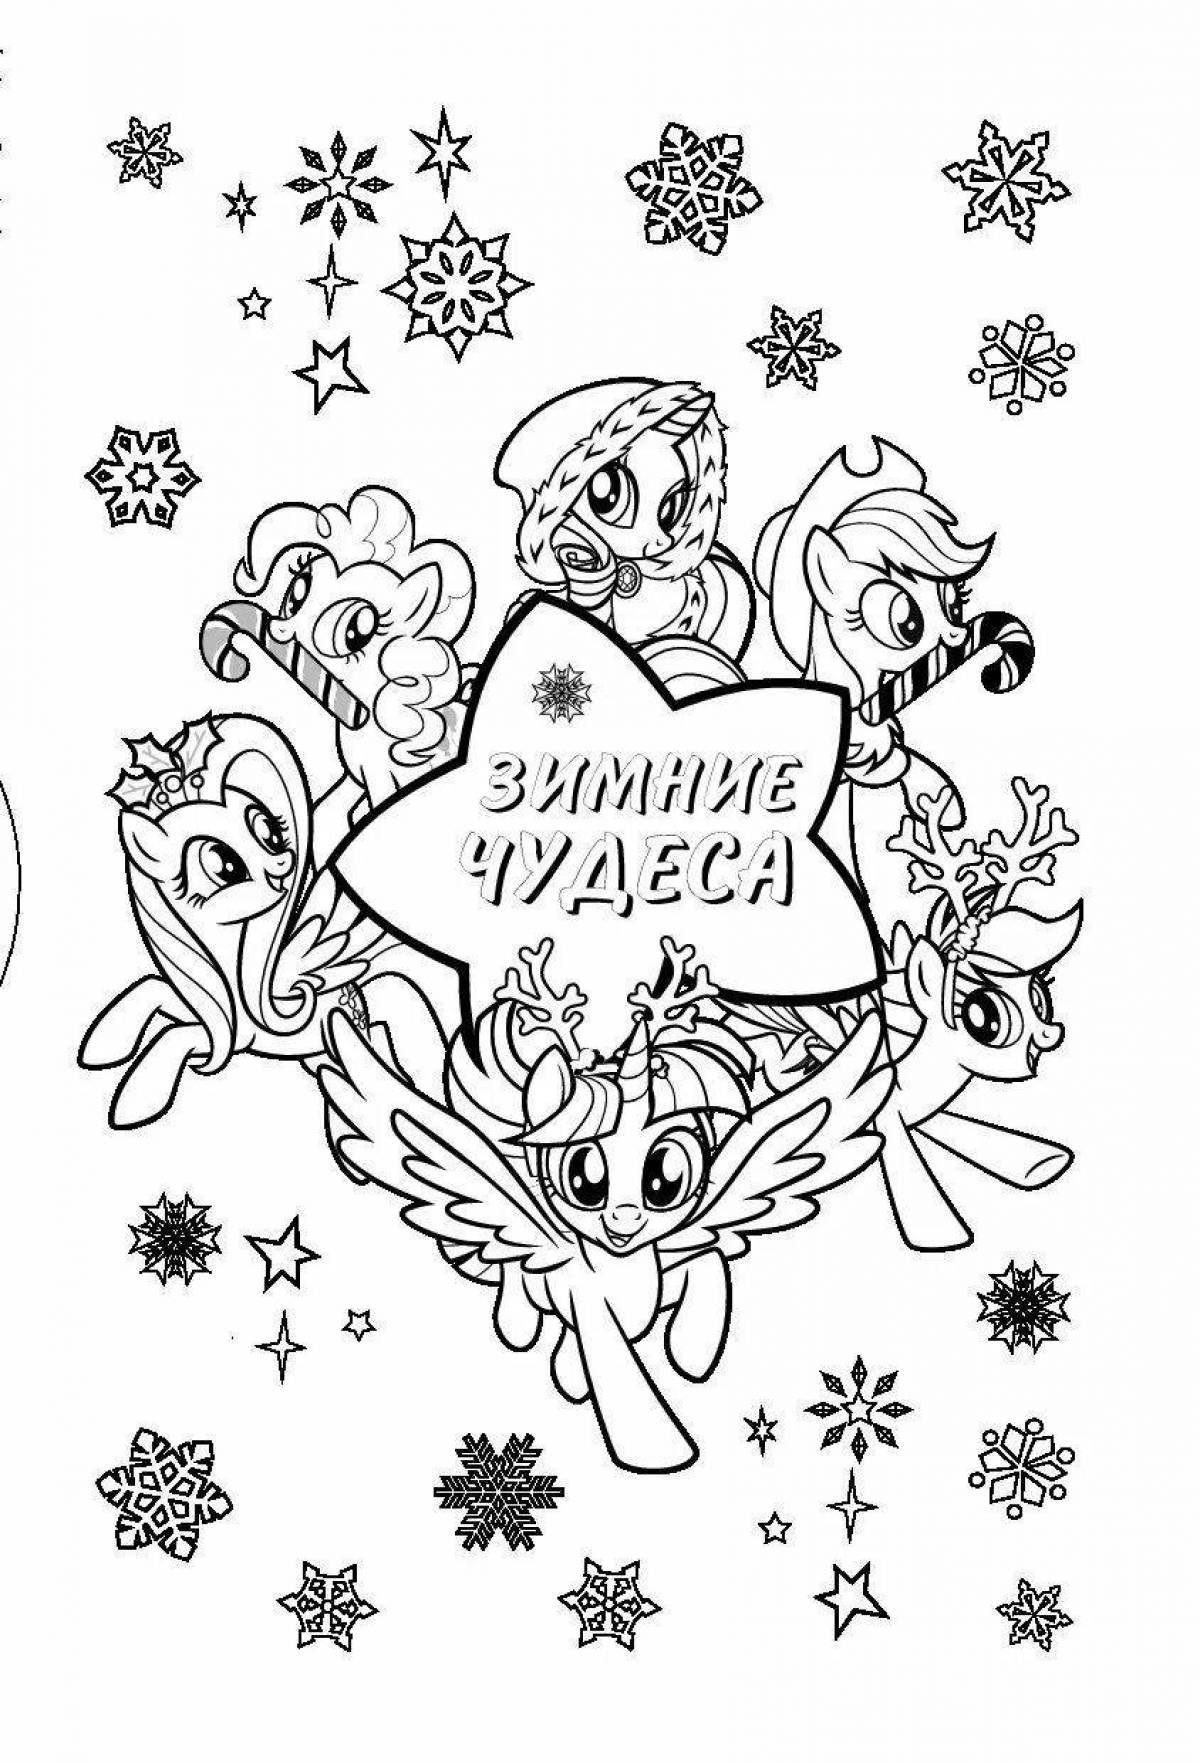 Adorable Christmas pony coloring book